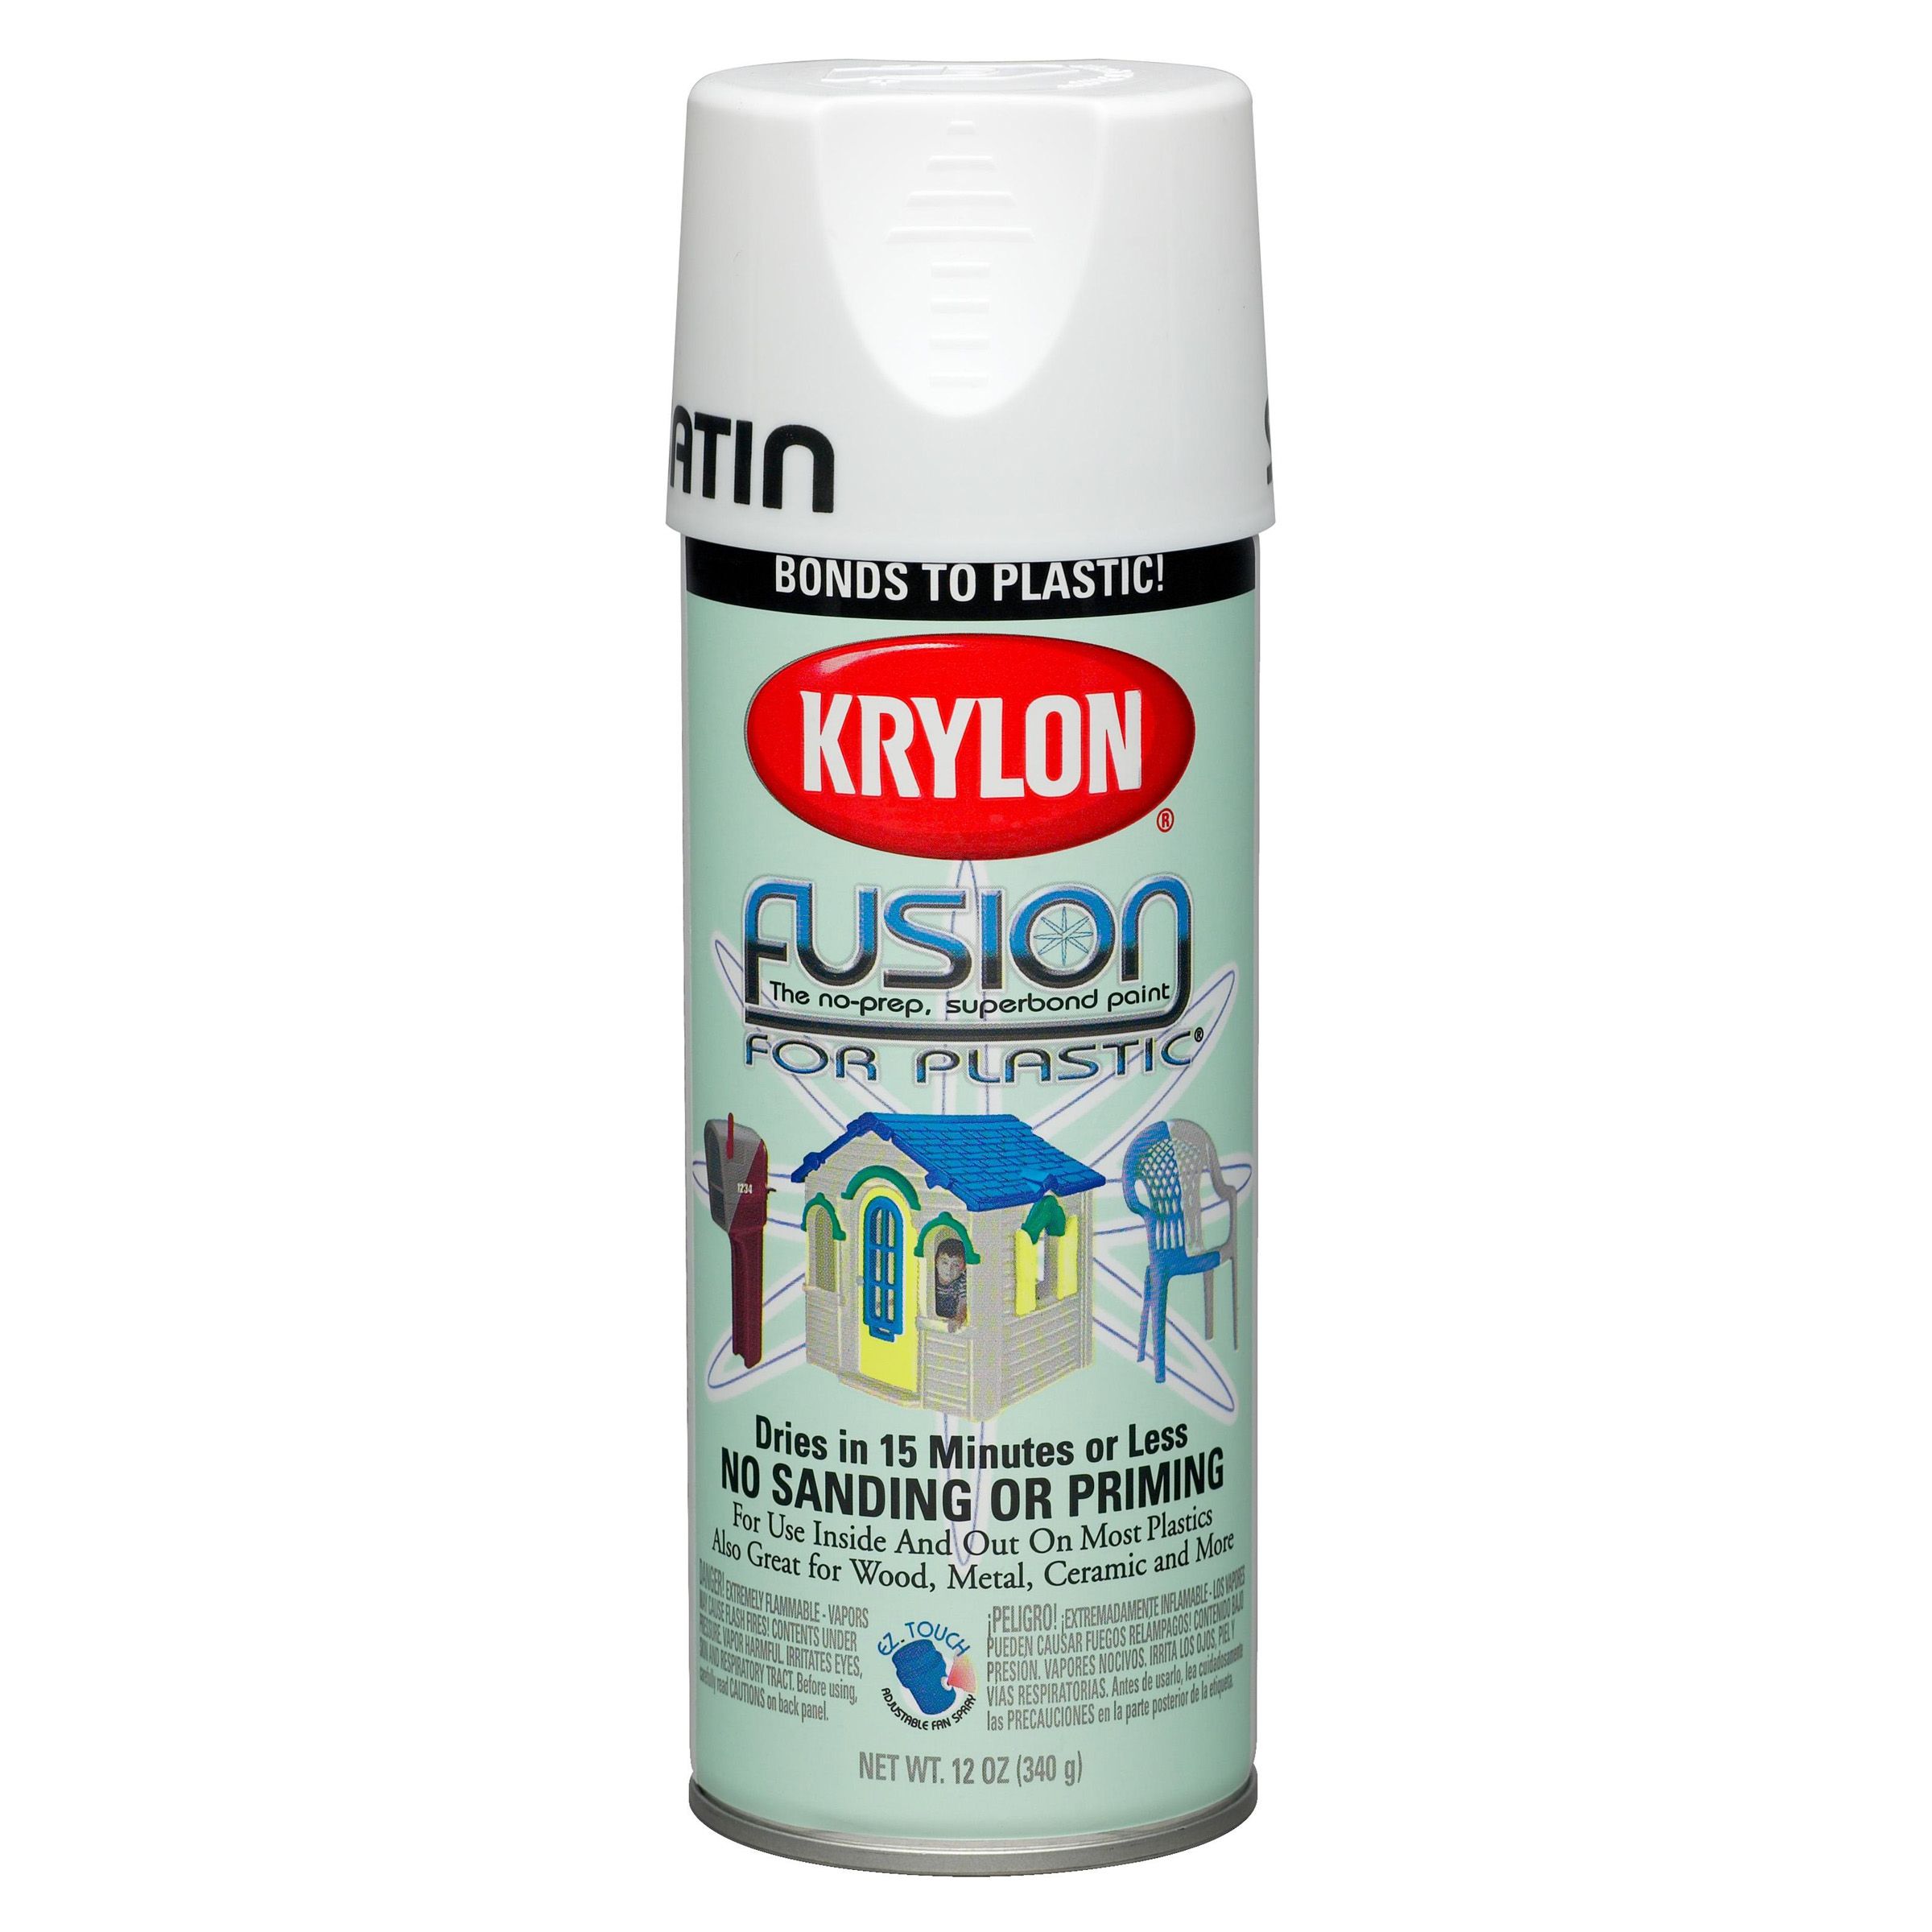 Krylon Fusion for Plastic® Satin White Tools